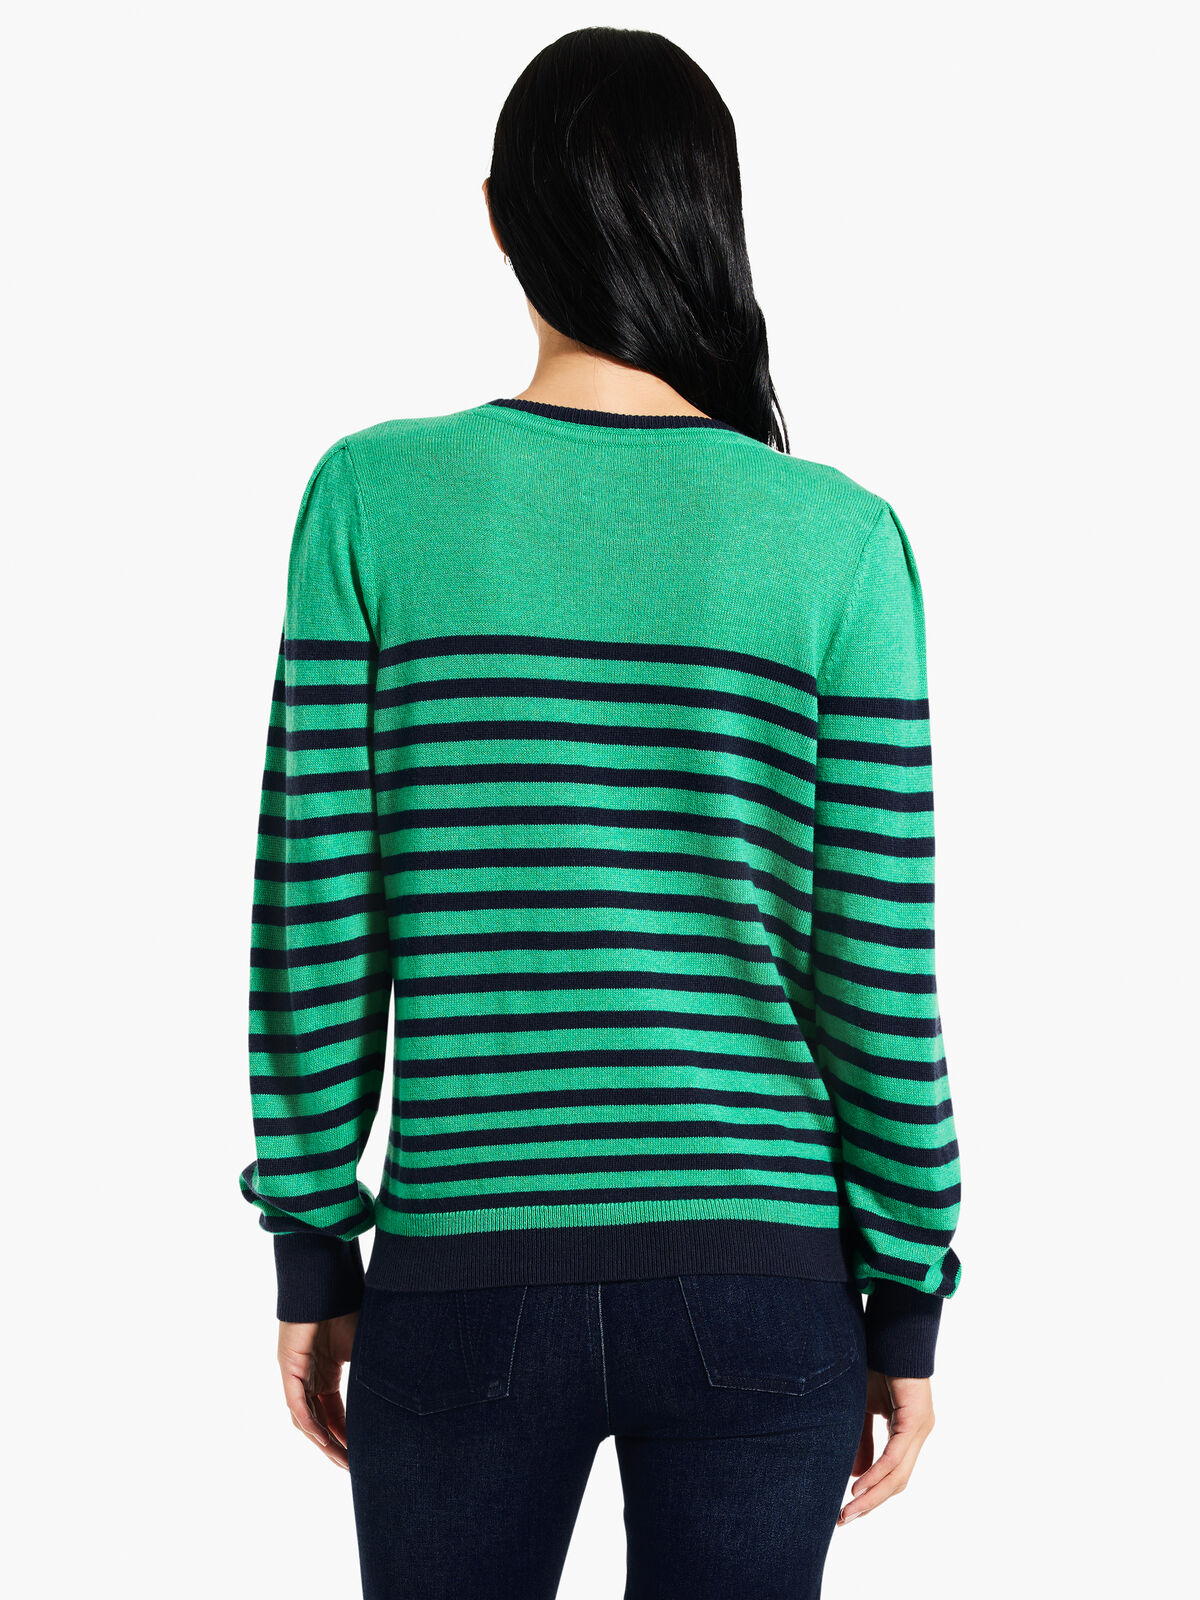 Striped Femme Sleeve Sweater